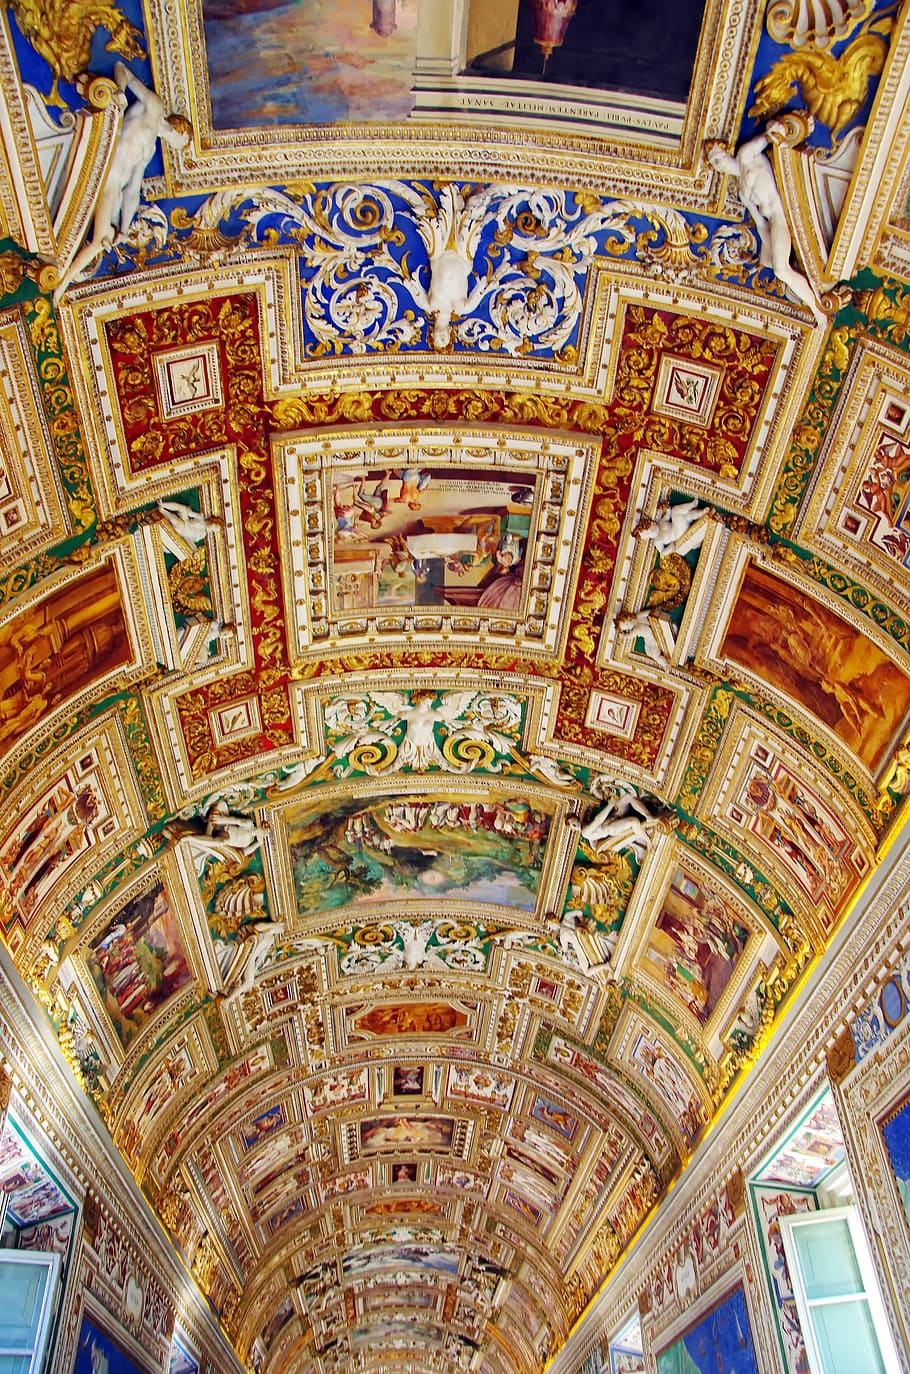 Italy, Rome, Vatican, Museum, Ceiling, fresco, decoration, mural